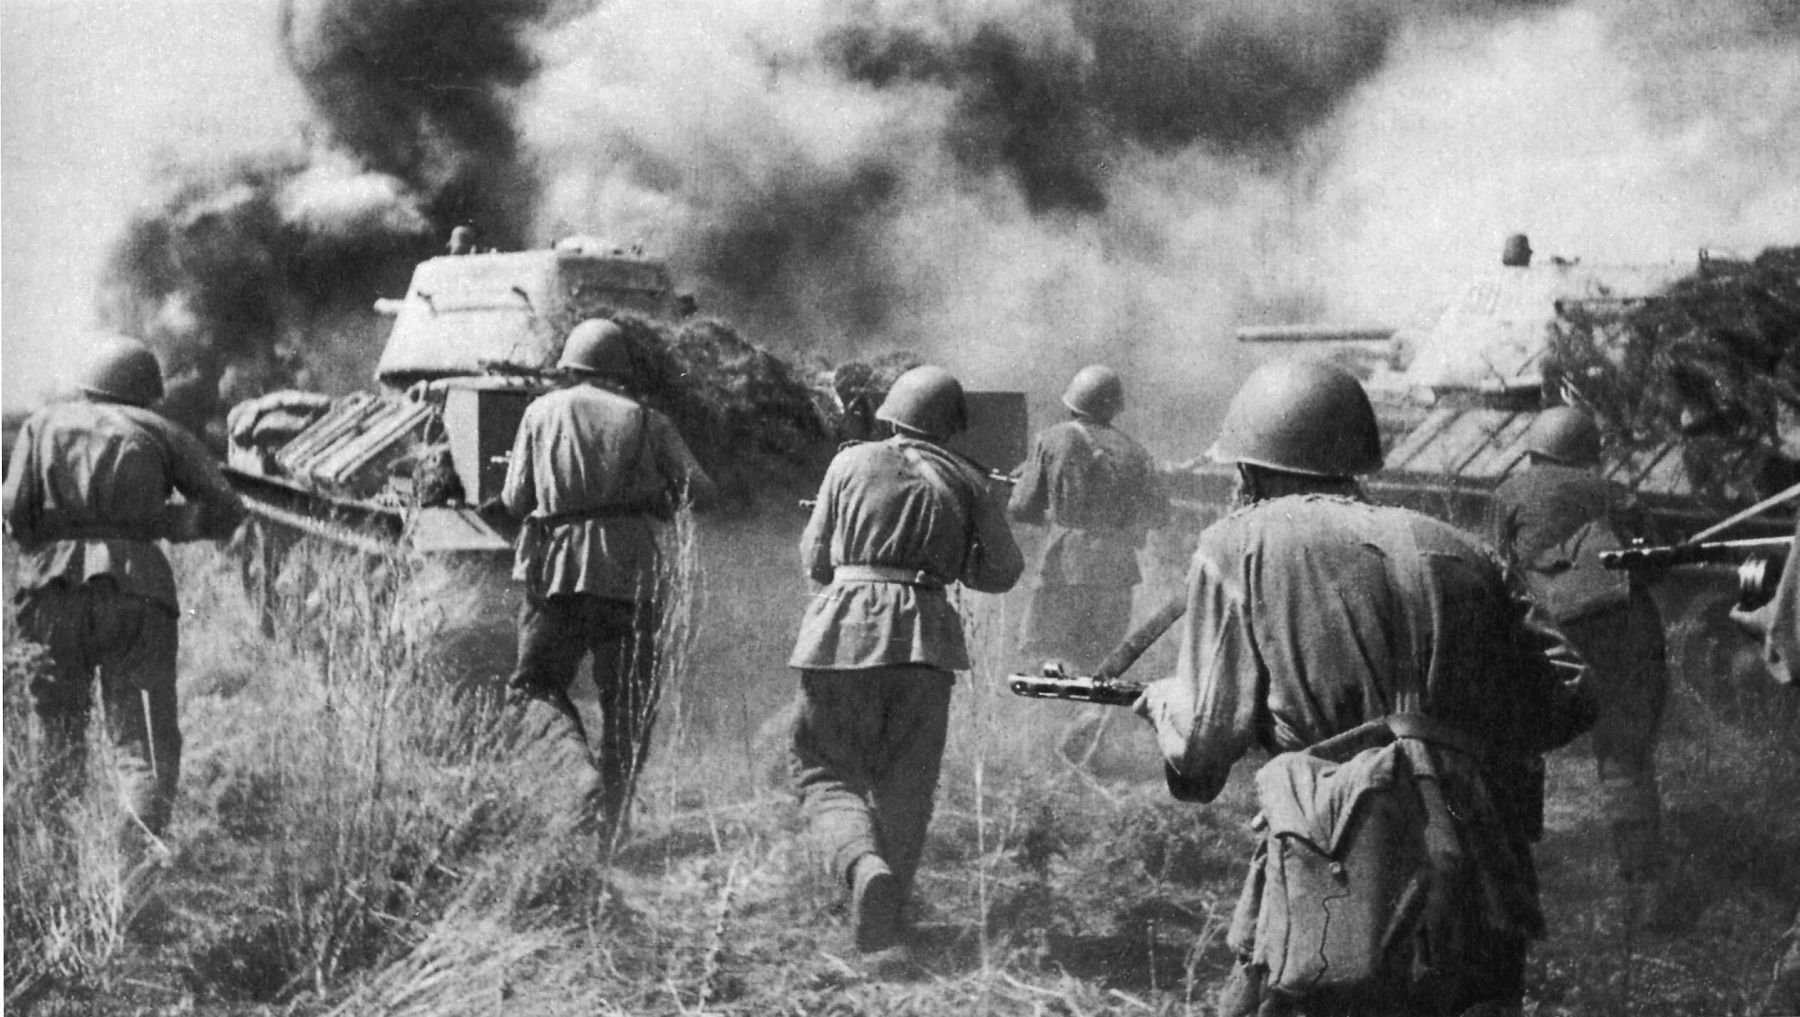 tank war in world war 2 kursk battle ground